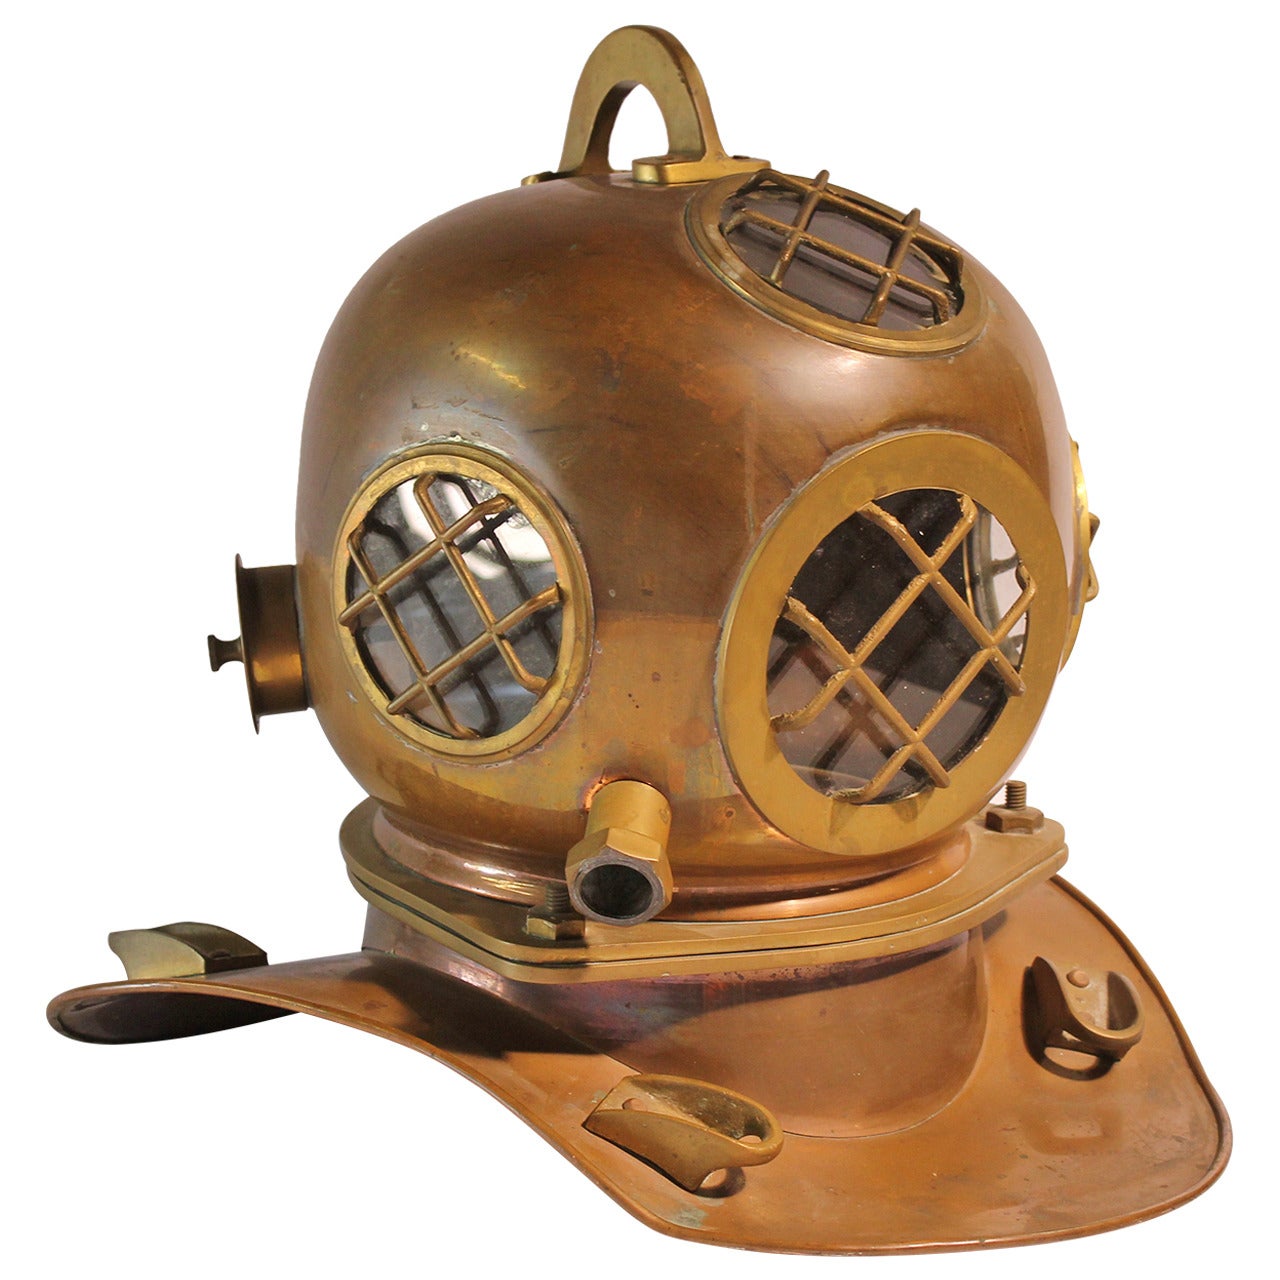 Life-Size Vintage Brass Replica of Diving Helmet